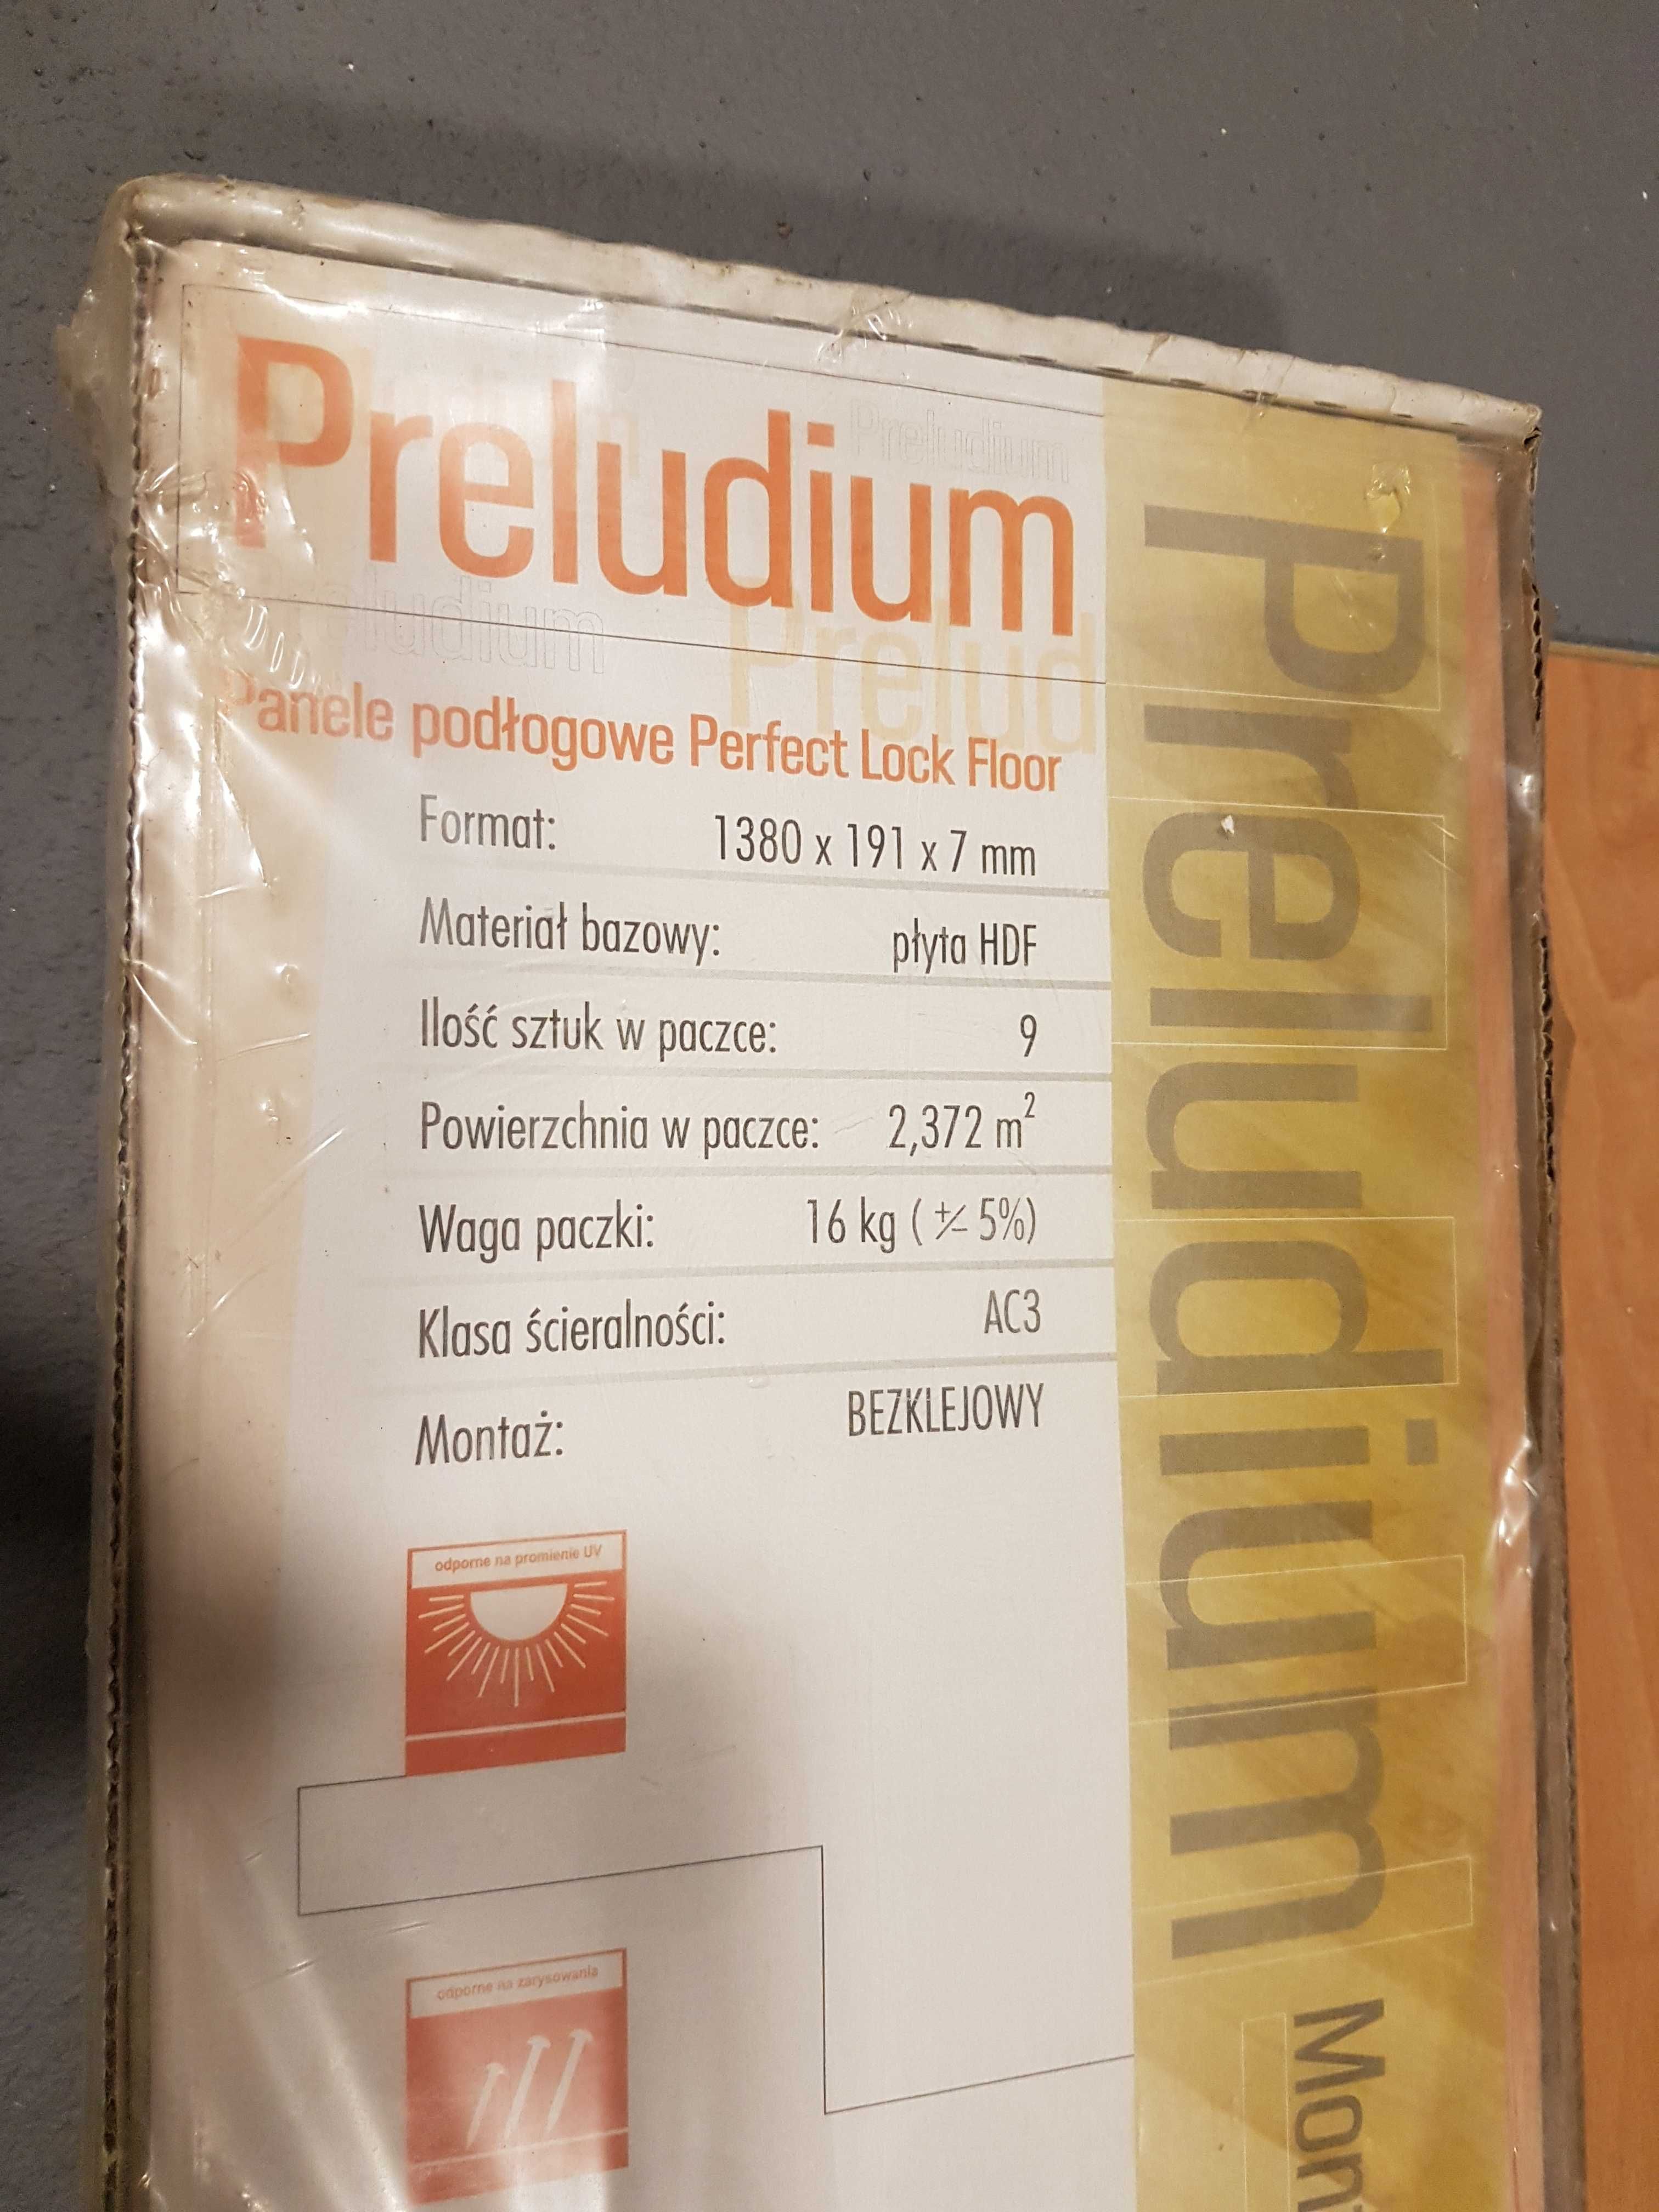 Panele podłogowe Preludium Perfect Lock Floor paczka 2.4 mkw